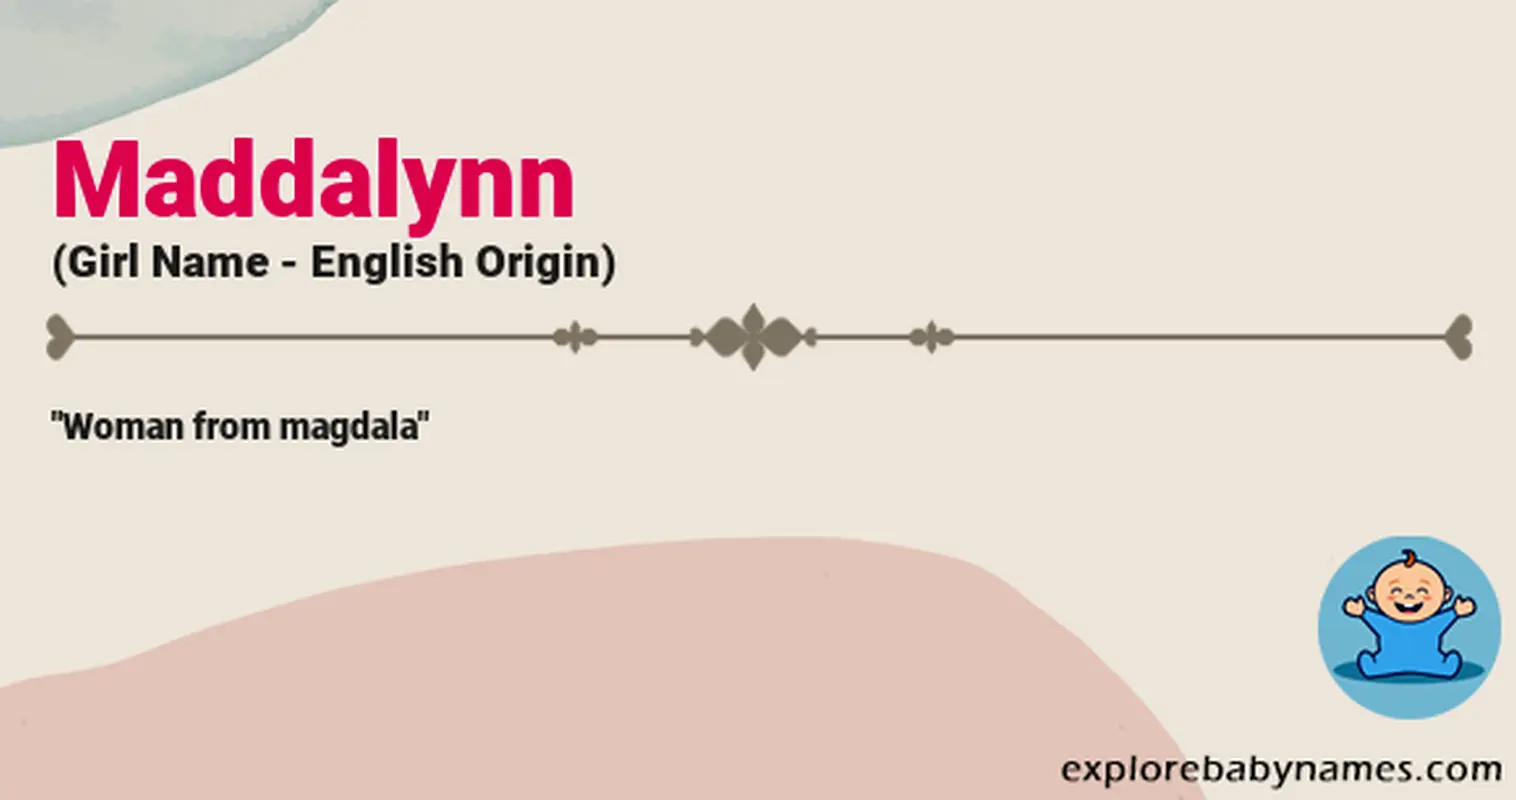 Meaning of Maddalynn